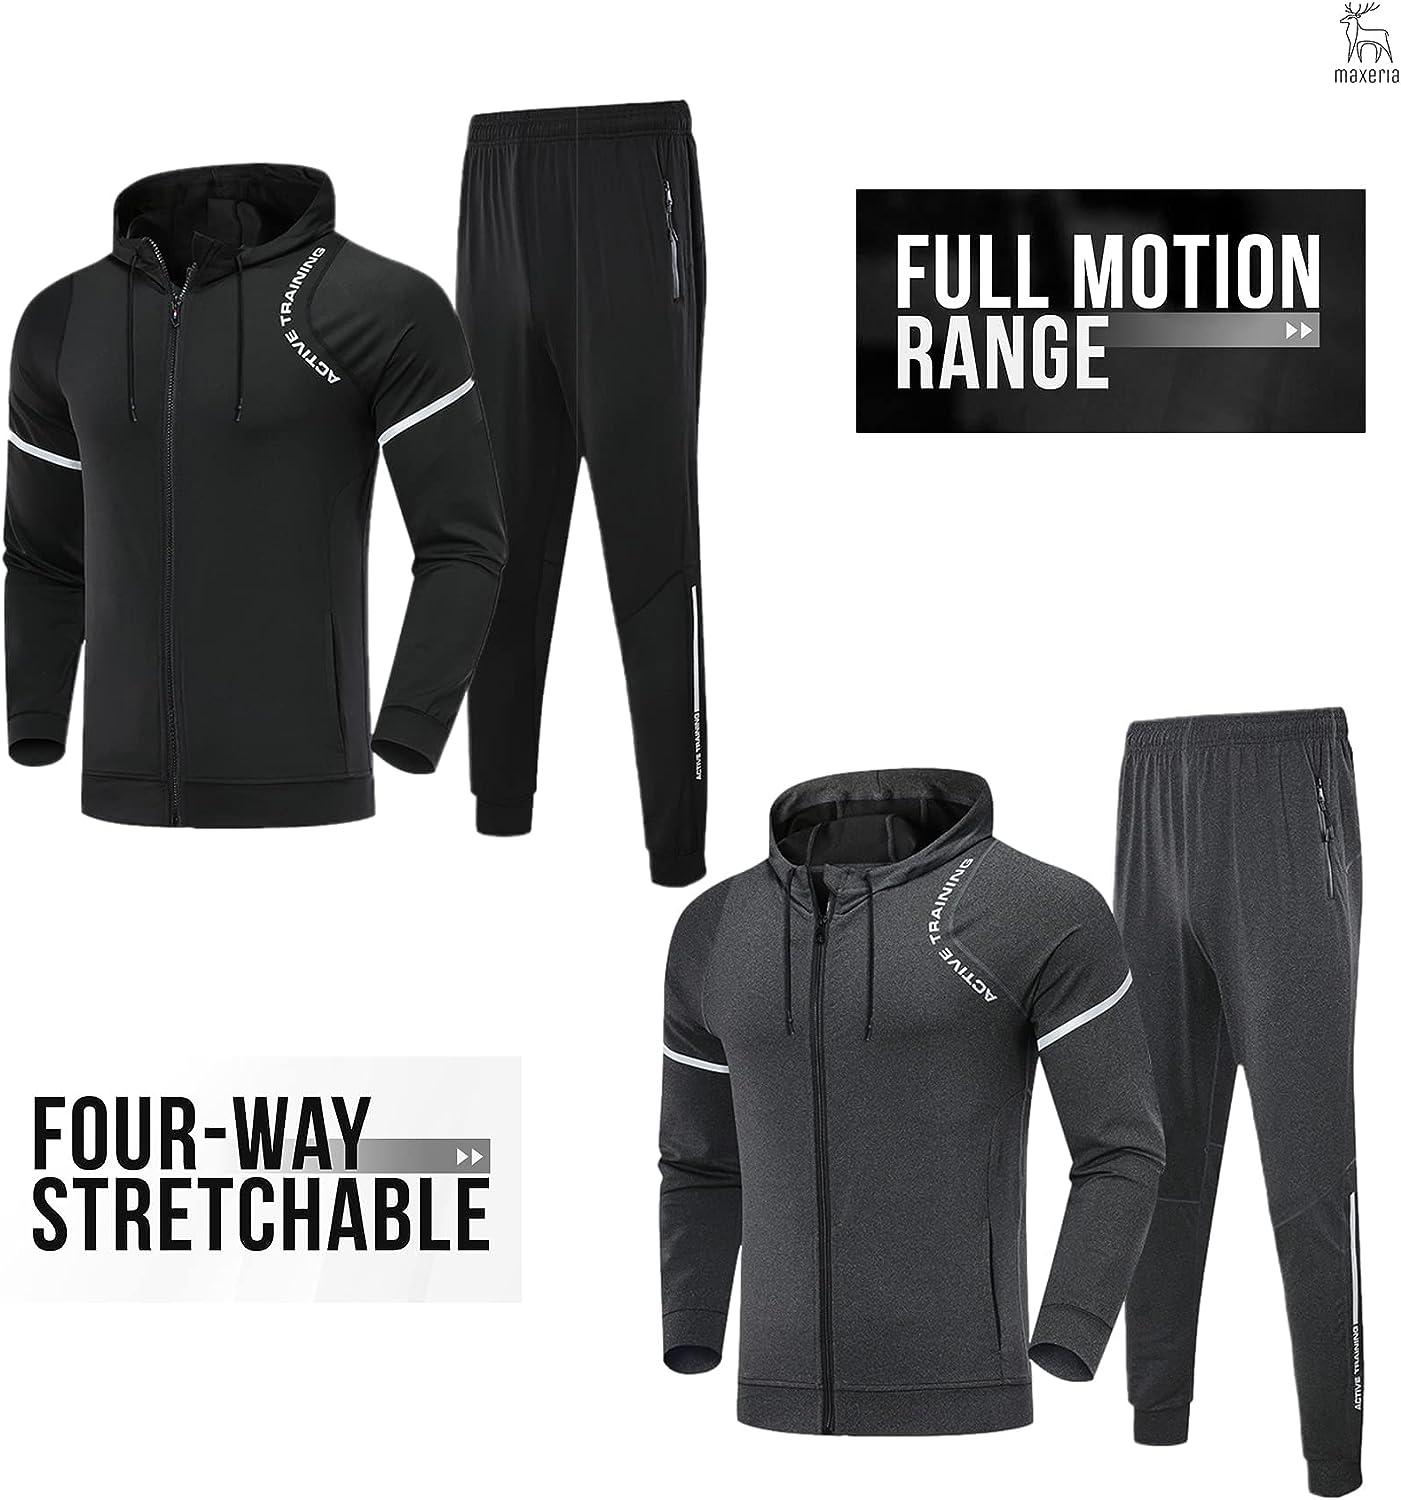 MAXERIA Athletic Zip Up Hoodie Running Jacket for Men Dry Fit Workout  Jacket Men's Fashion Reflective Jacket Black Medium